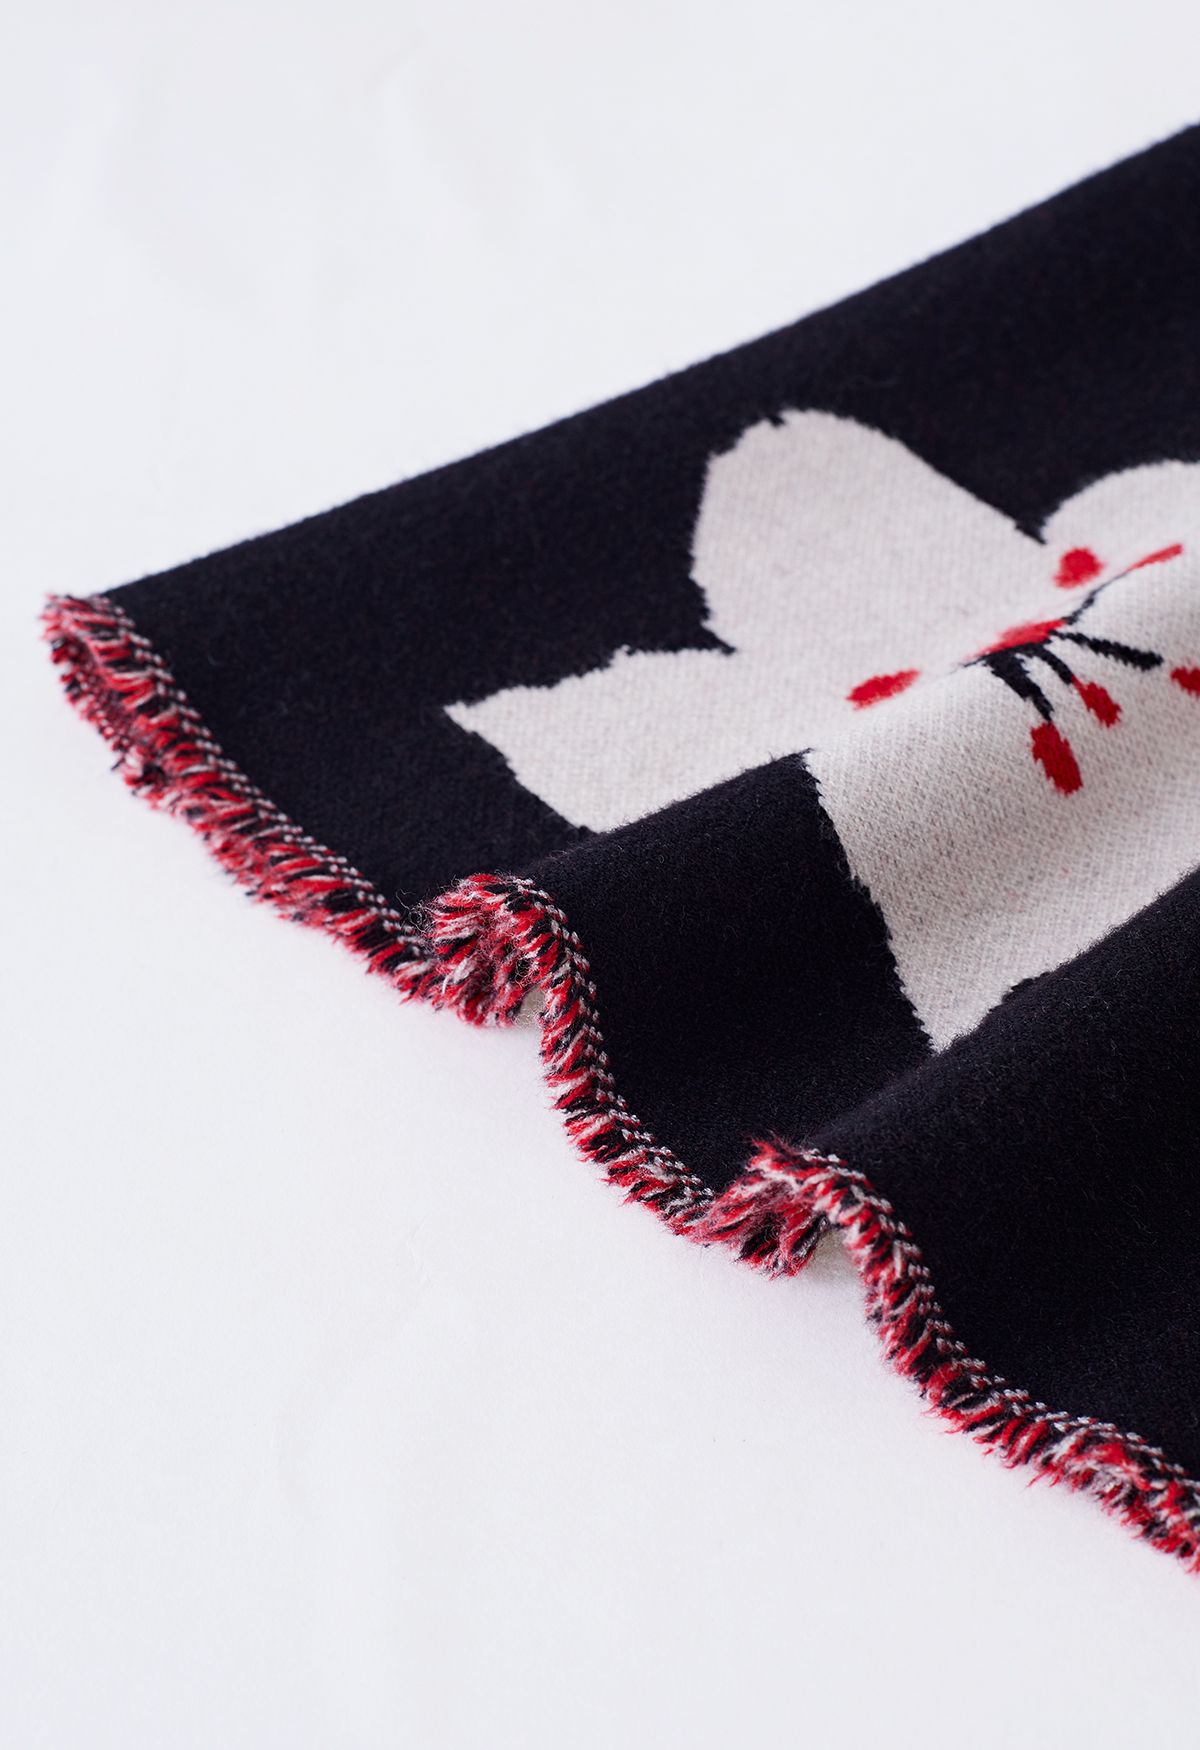 Fringed Hem Floral Knit Midi Skirt